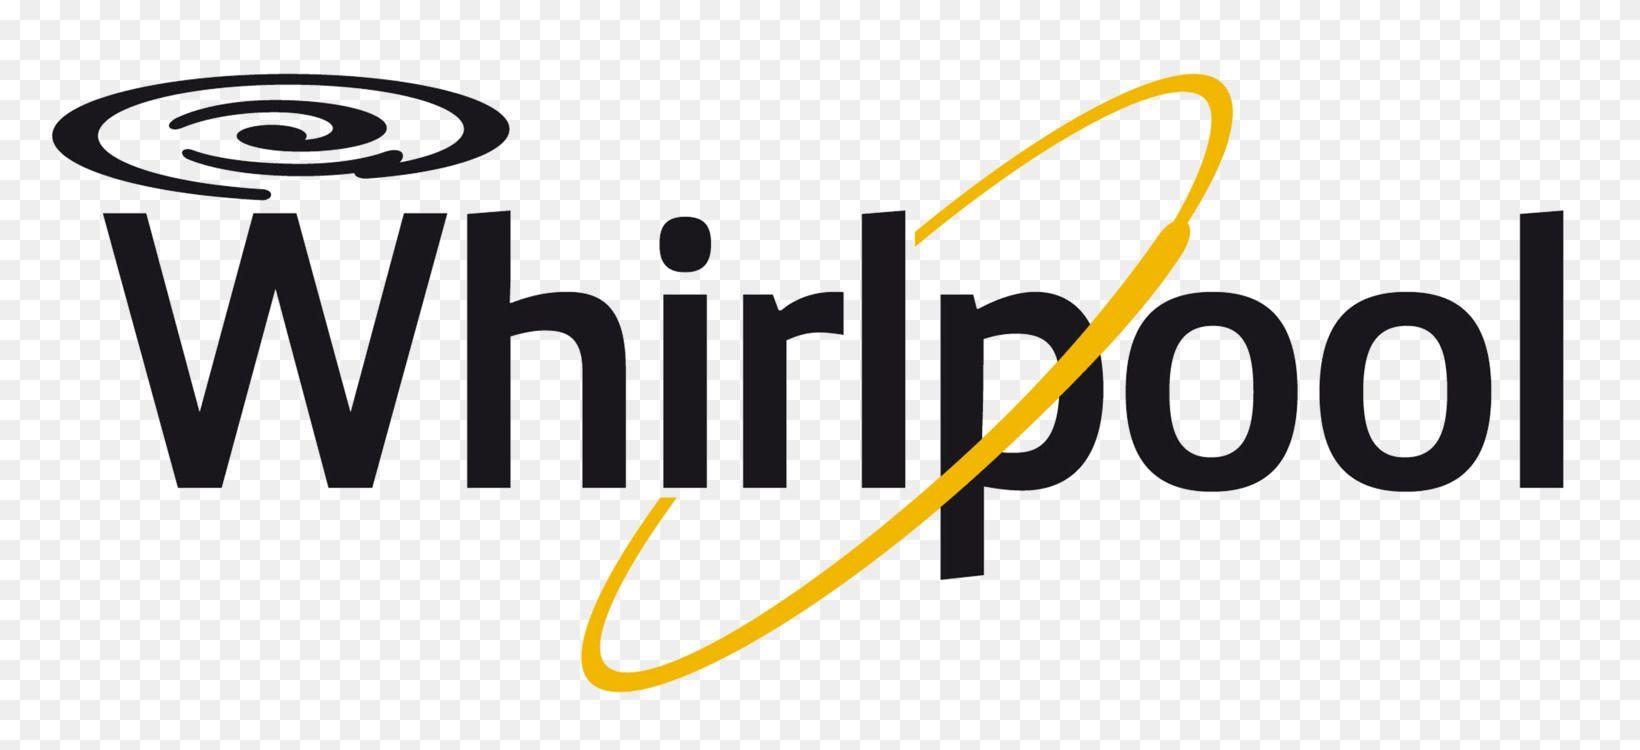 Home Appliance Logo - Whirlpool Corporation Home appliance Business Major appliance ...